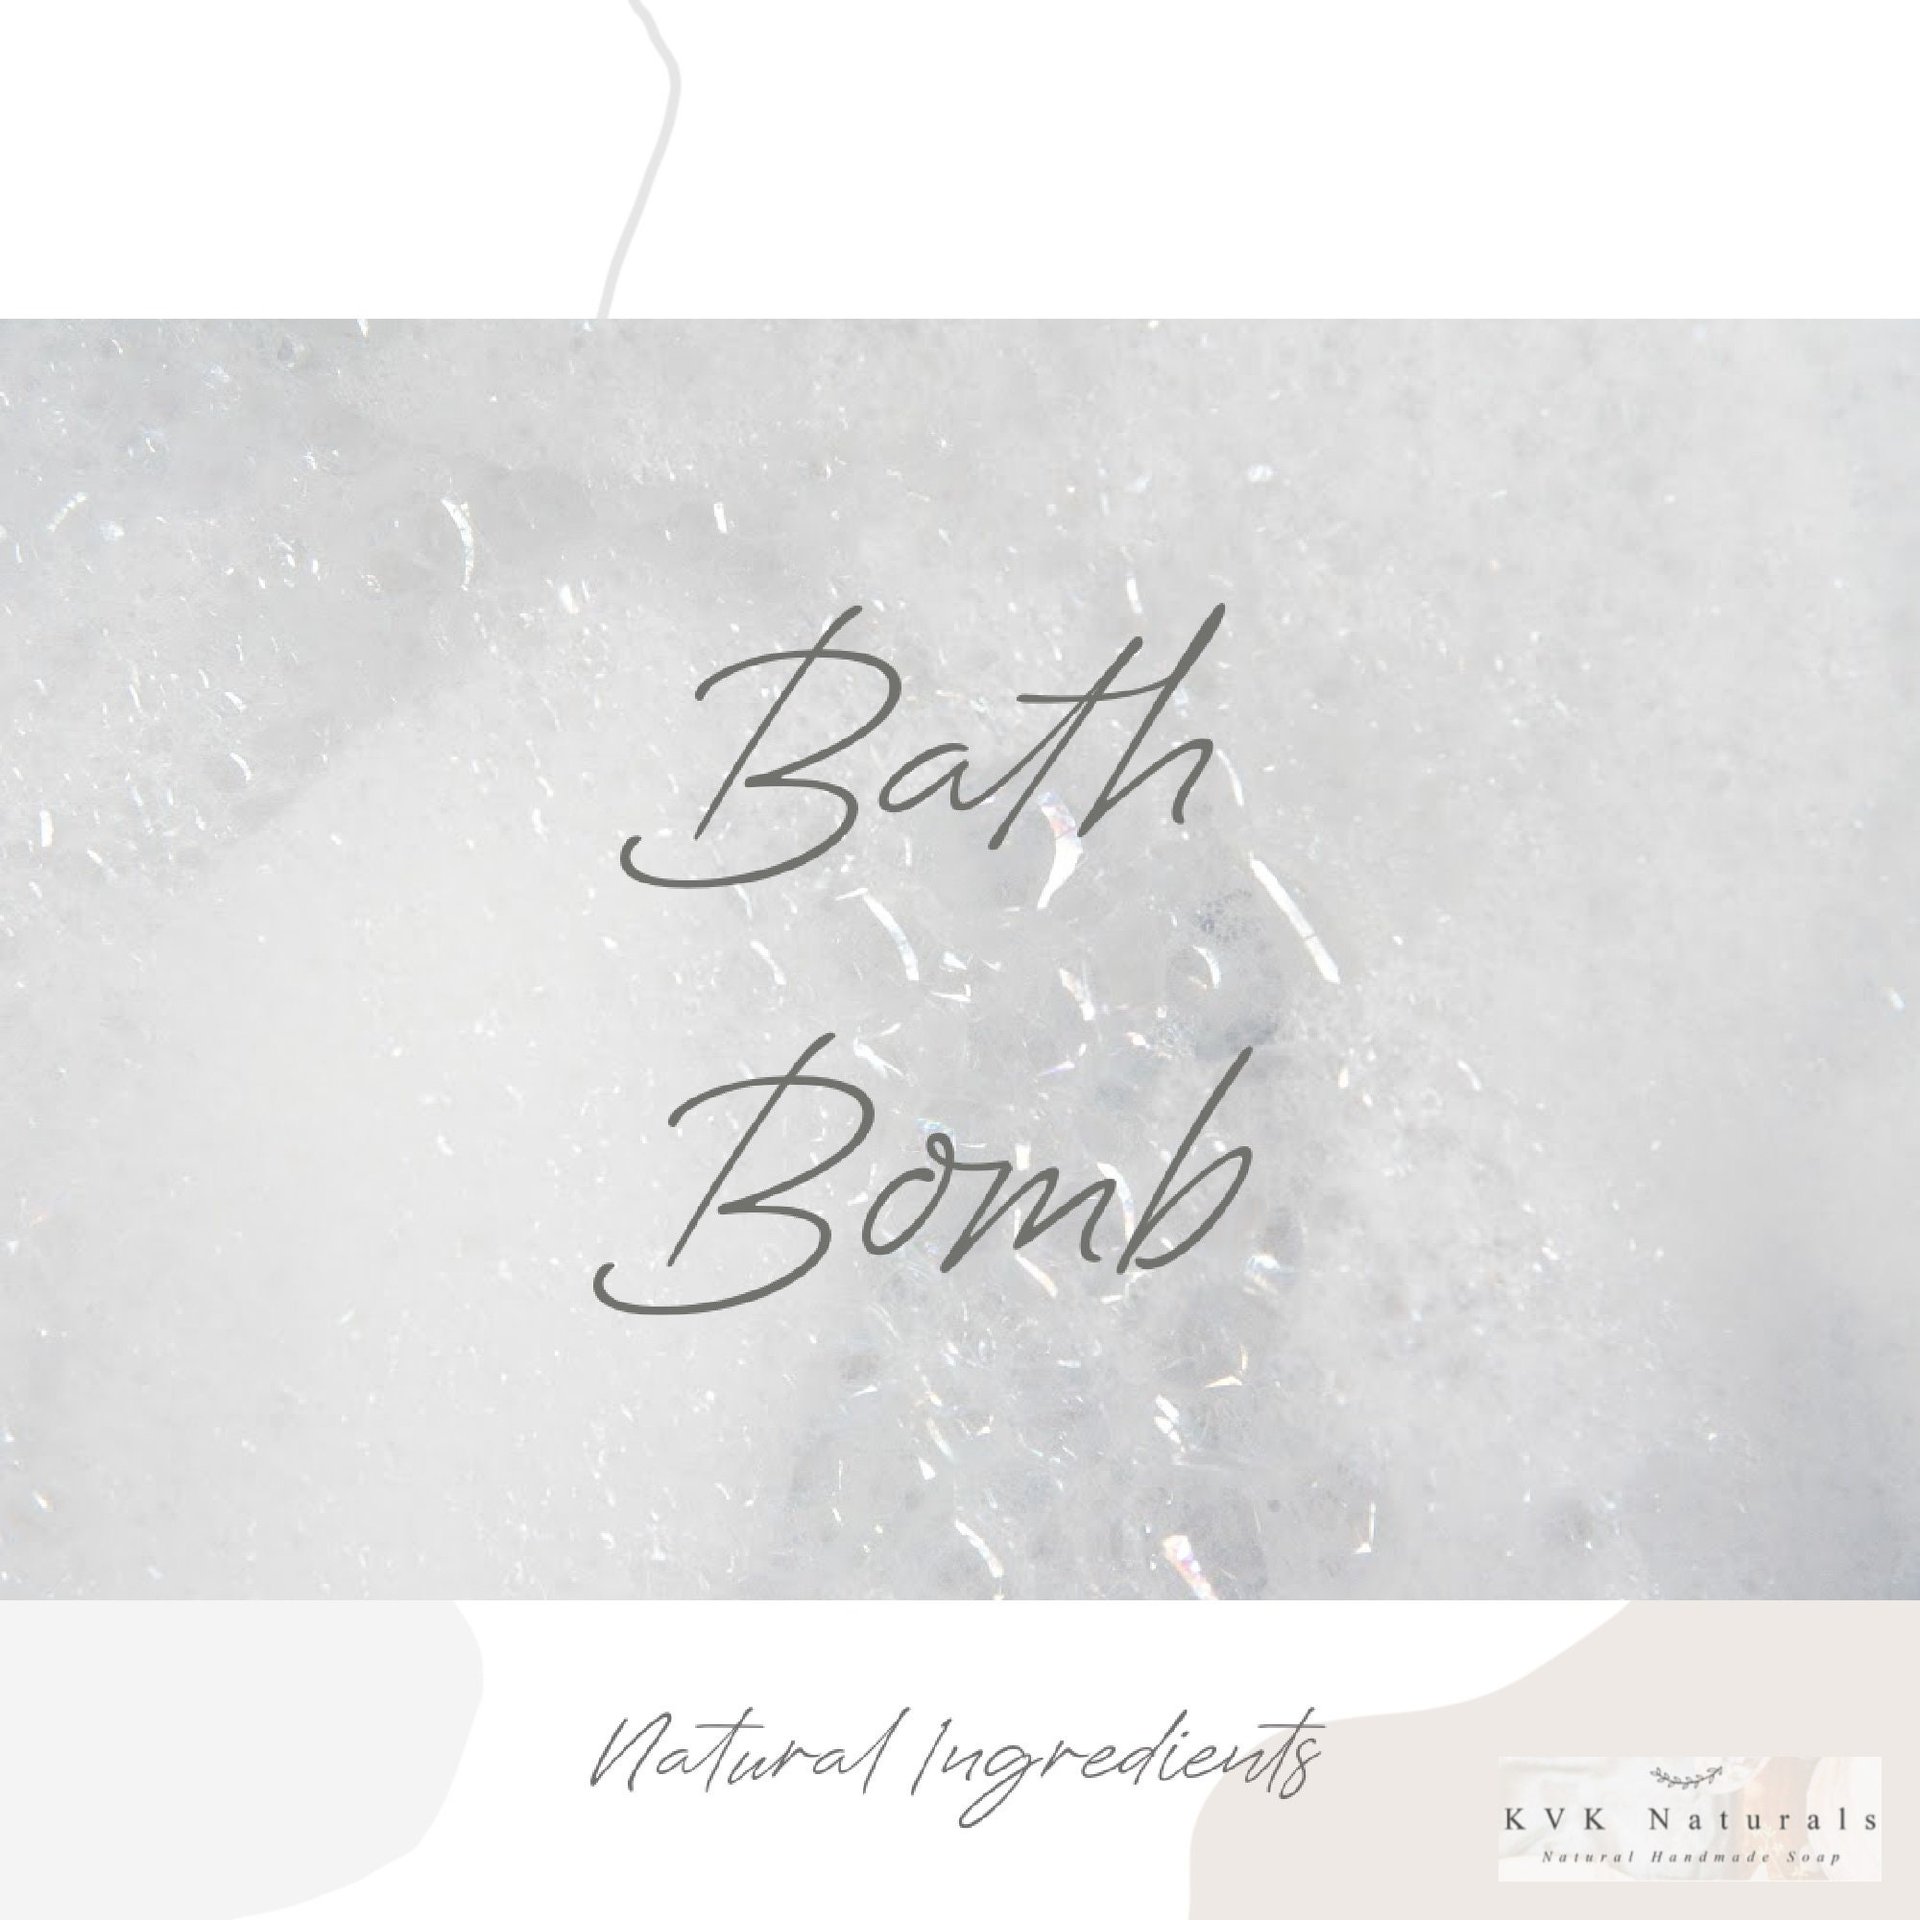 Bath Bomb Fresh Ginger Lime - Bath Bombs, Organic Bath Bomb, All Natural Bath Bomb